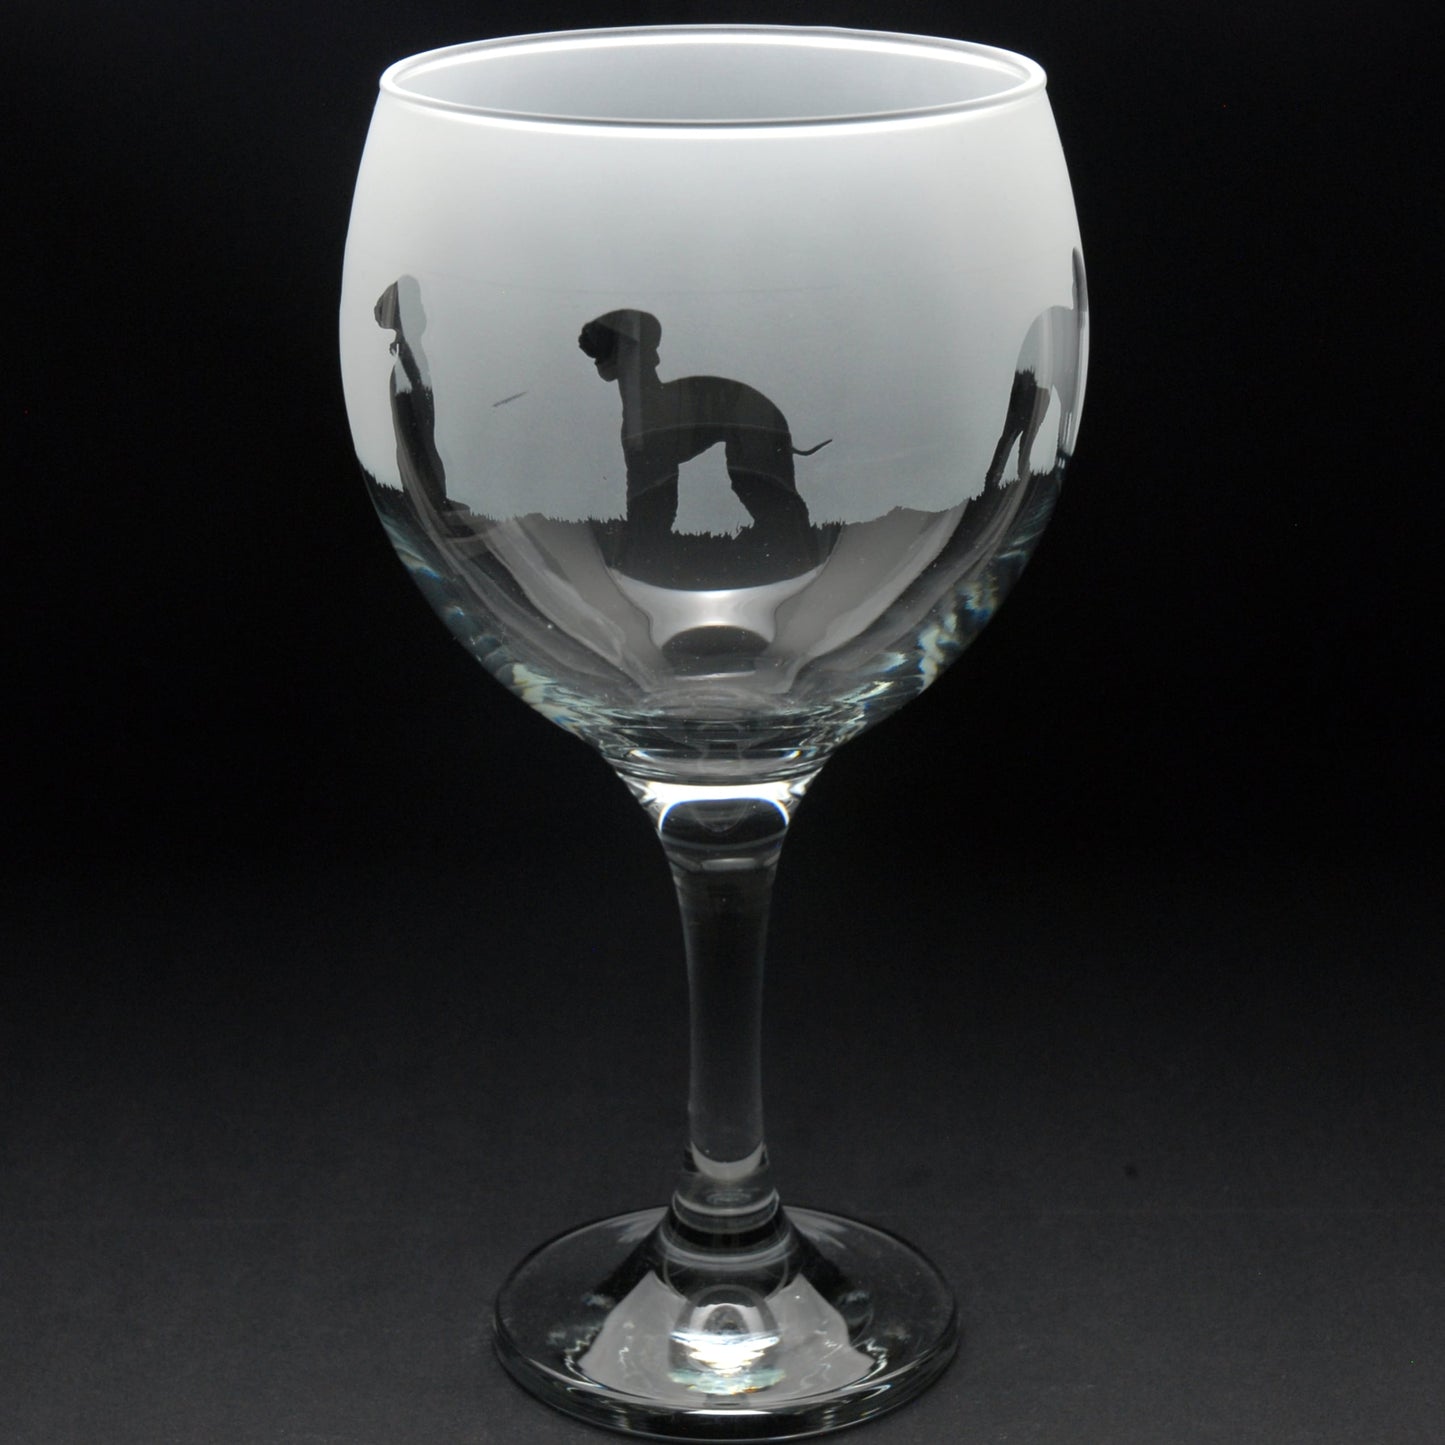 Bedlington Terrier Dog Gin Cocktail Glass - Hand Etched/Engraved Gift